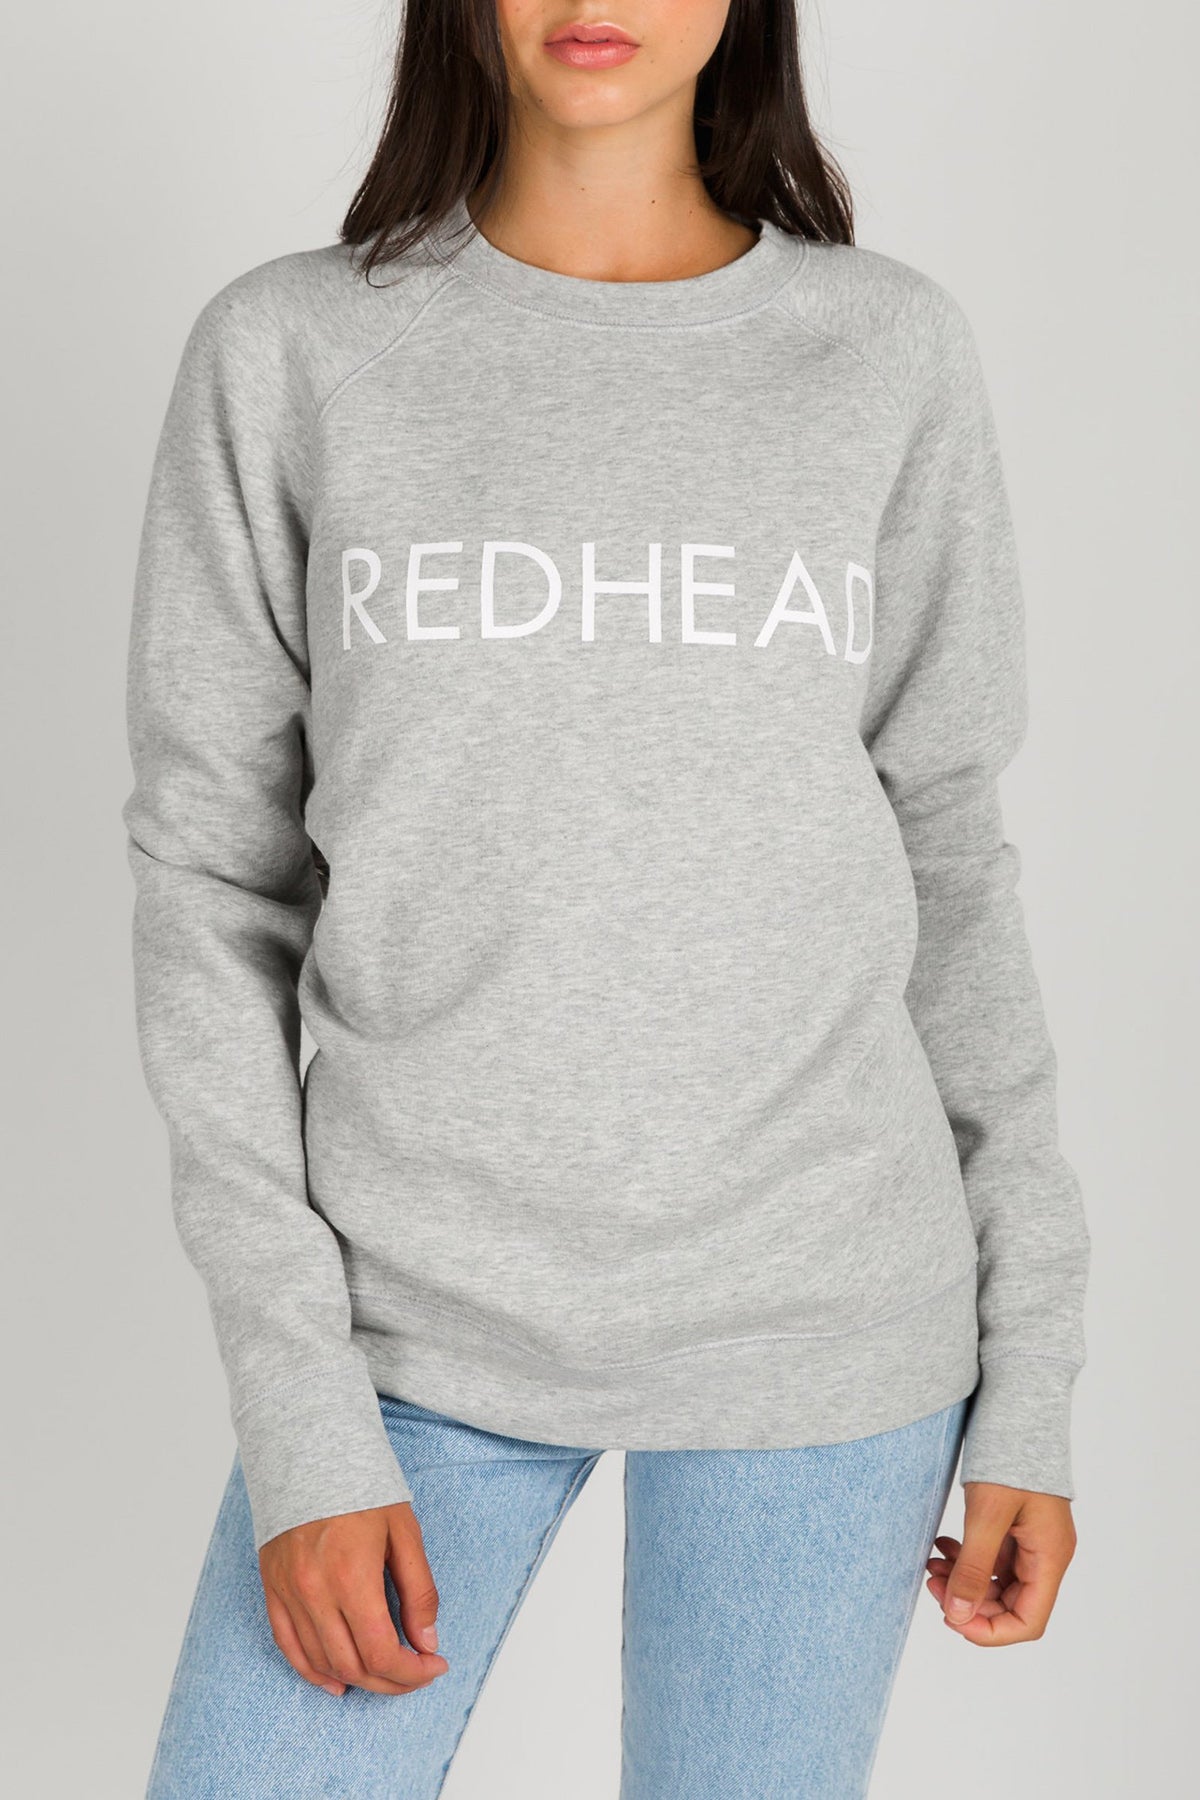 The "REDHEAD" Classic Crew Neck Sweatshirt | Pebble Grey